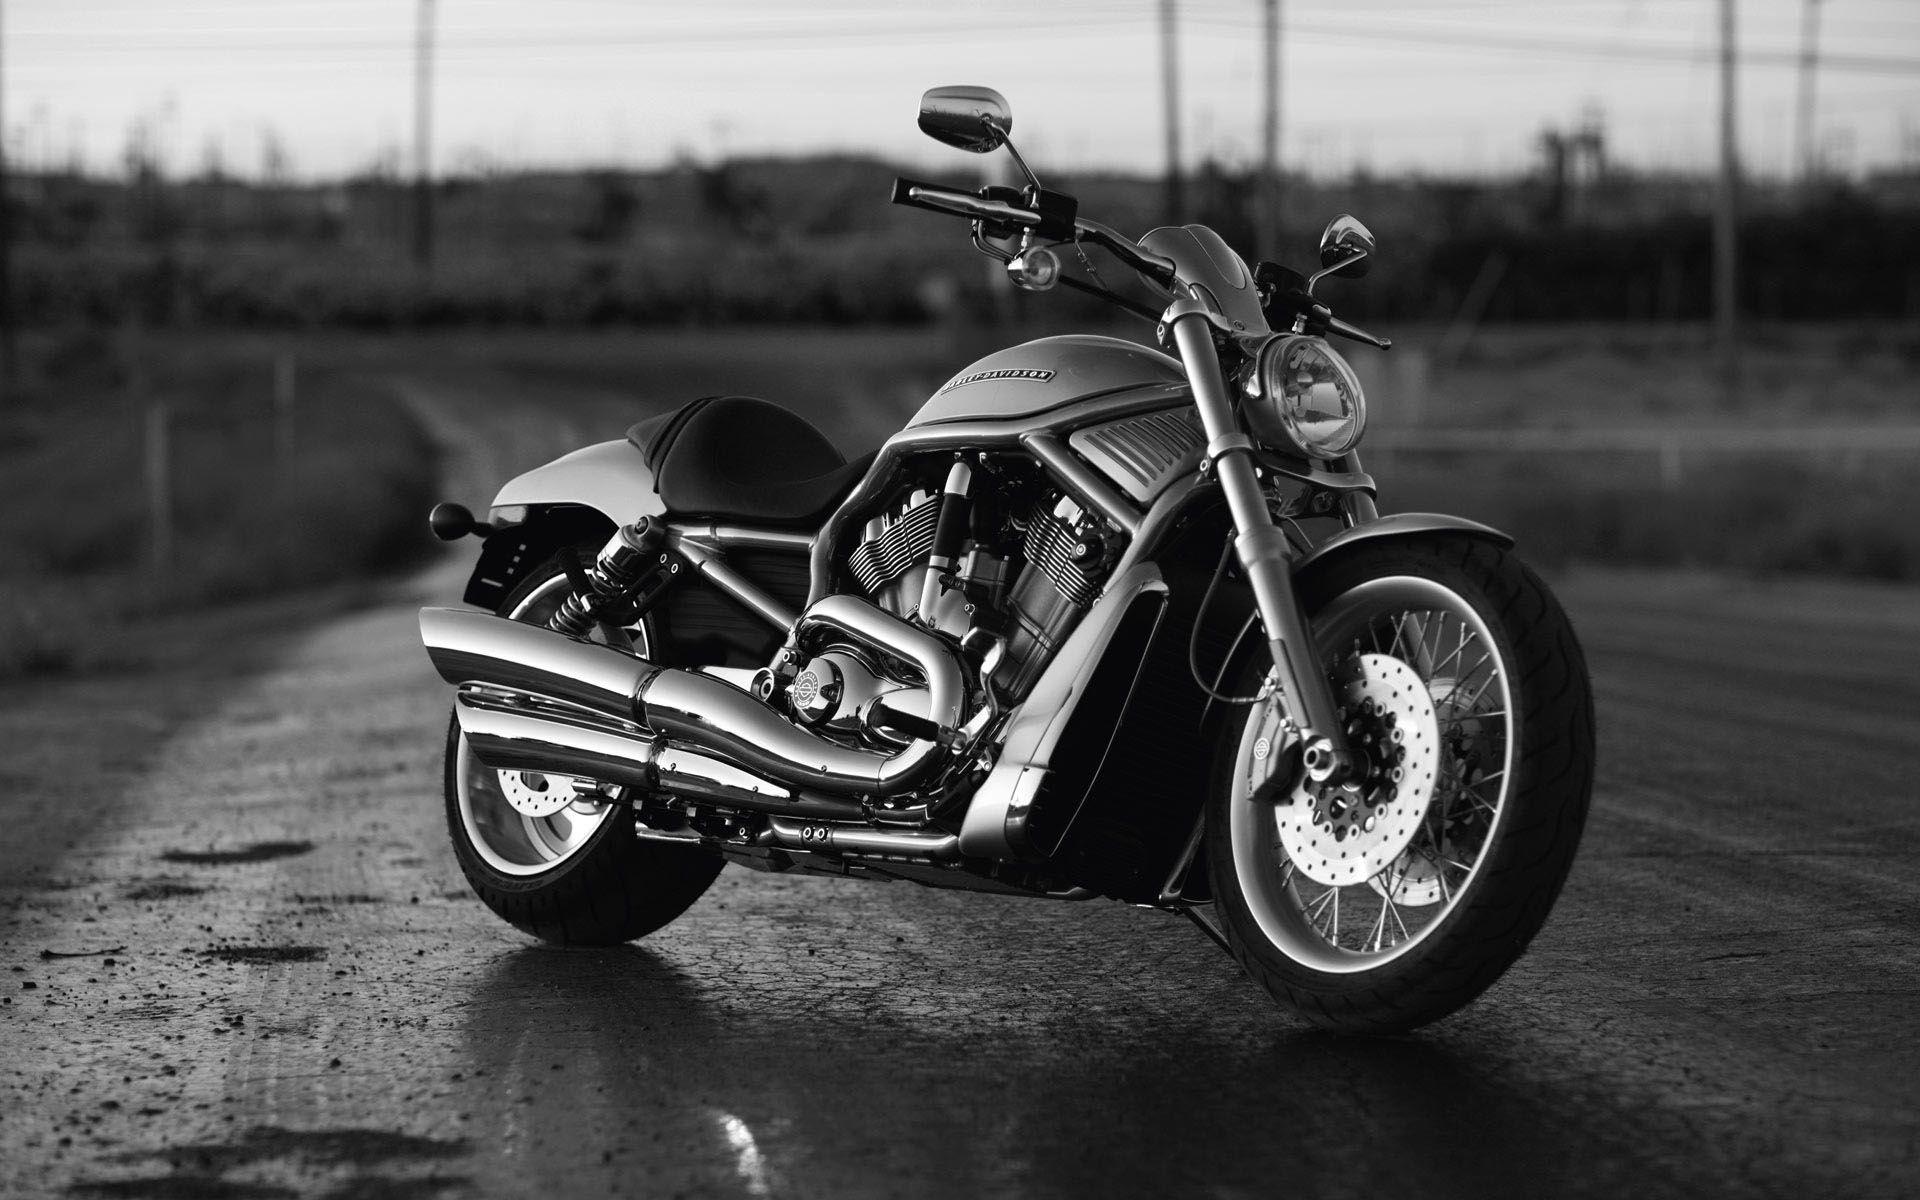 Harley Davidson Bike Wallpaper Hd Download For Android Mobile